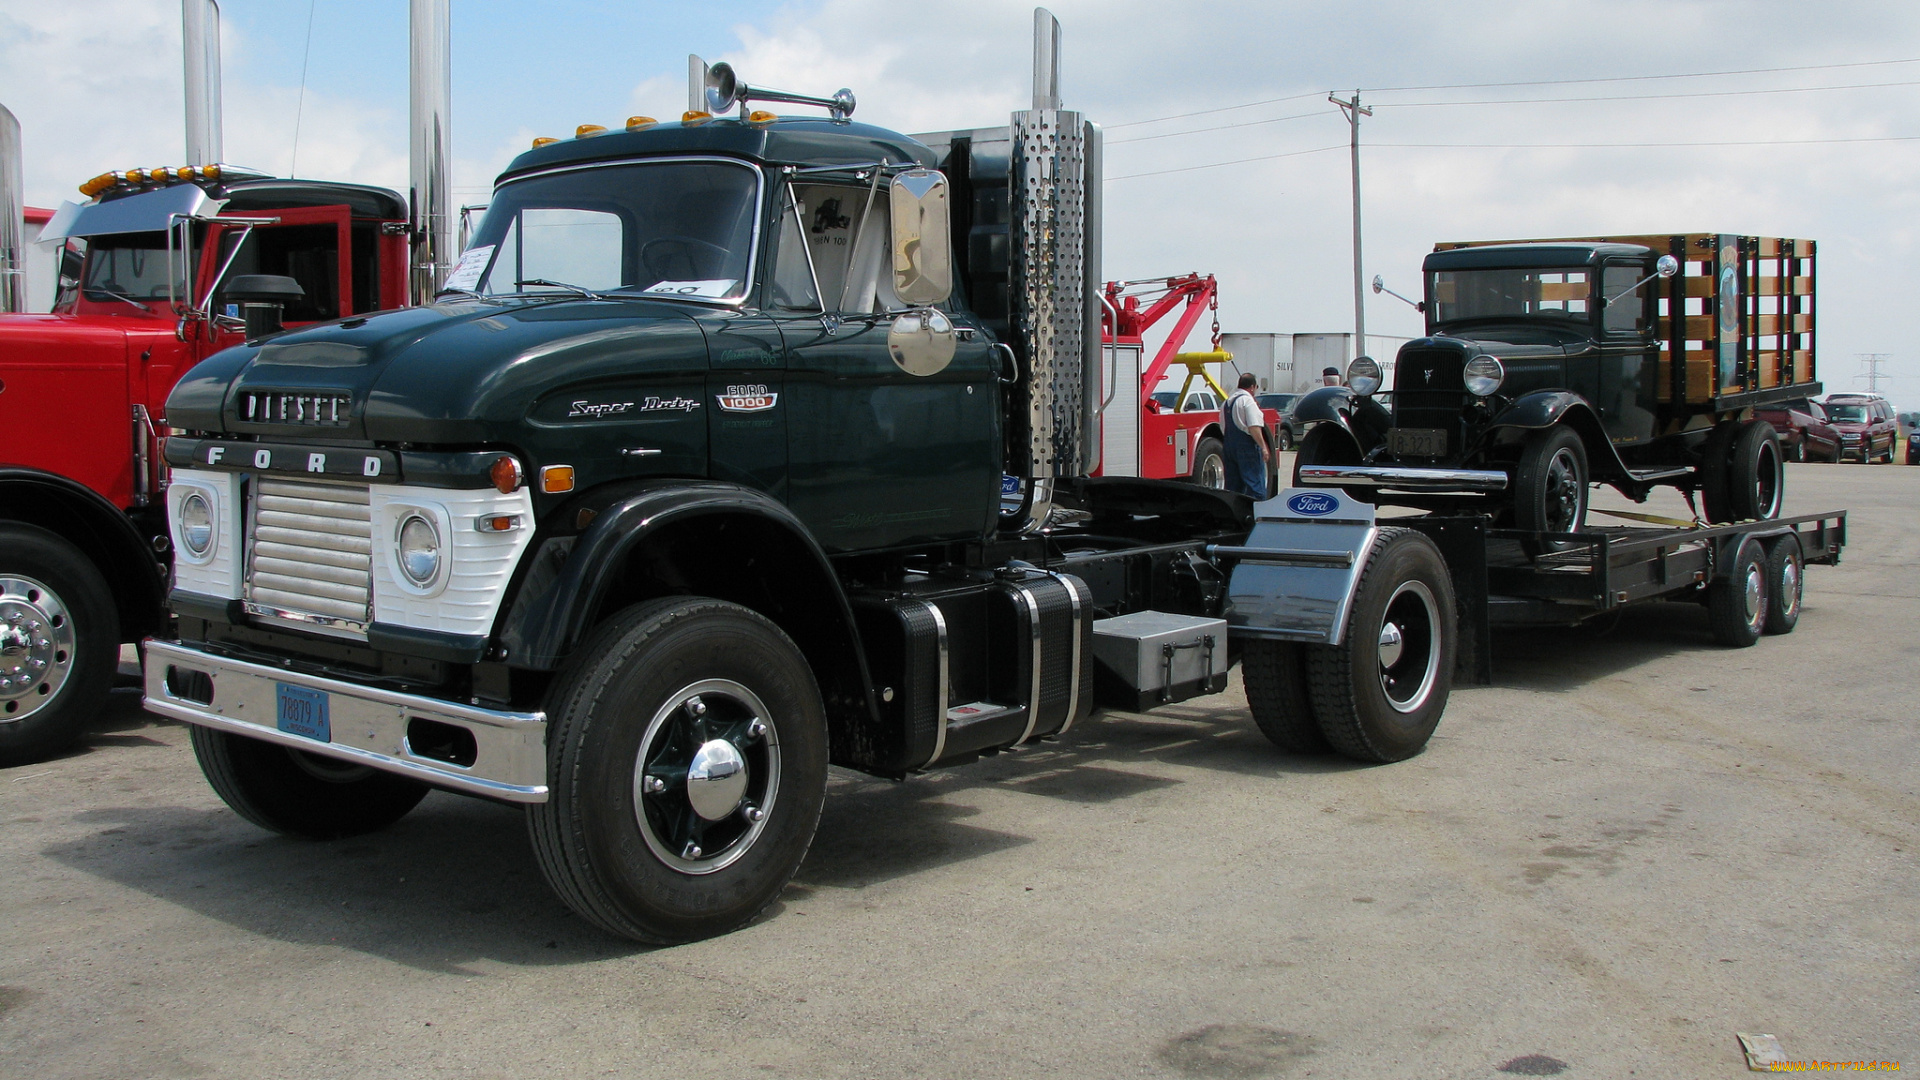 1966, ford, truck, model, n-1000, автомобили, ford, trucks, тяжёлый, седельный, грузовик, тягач